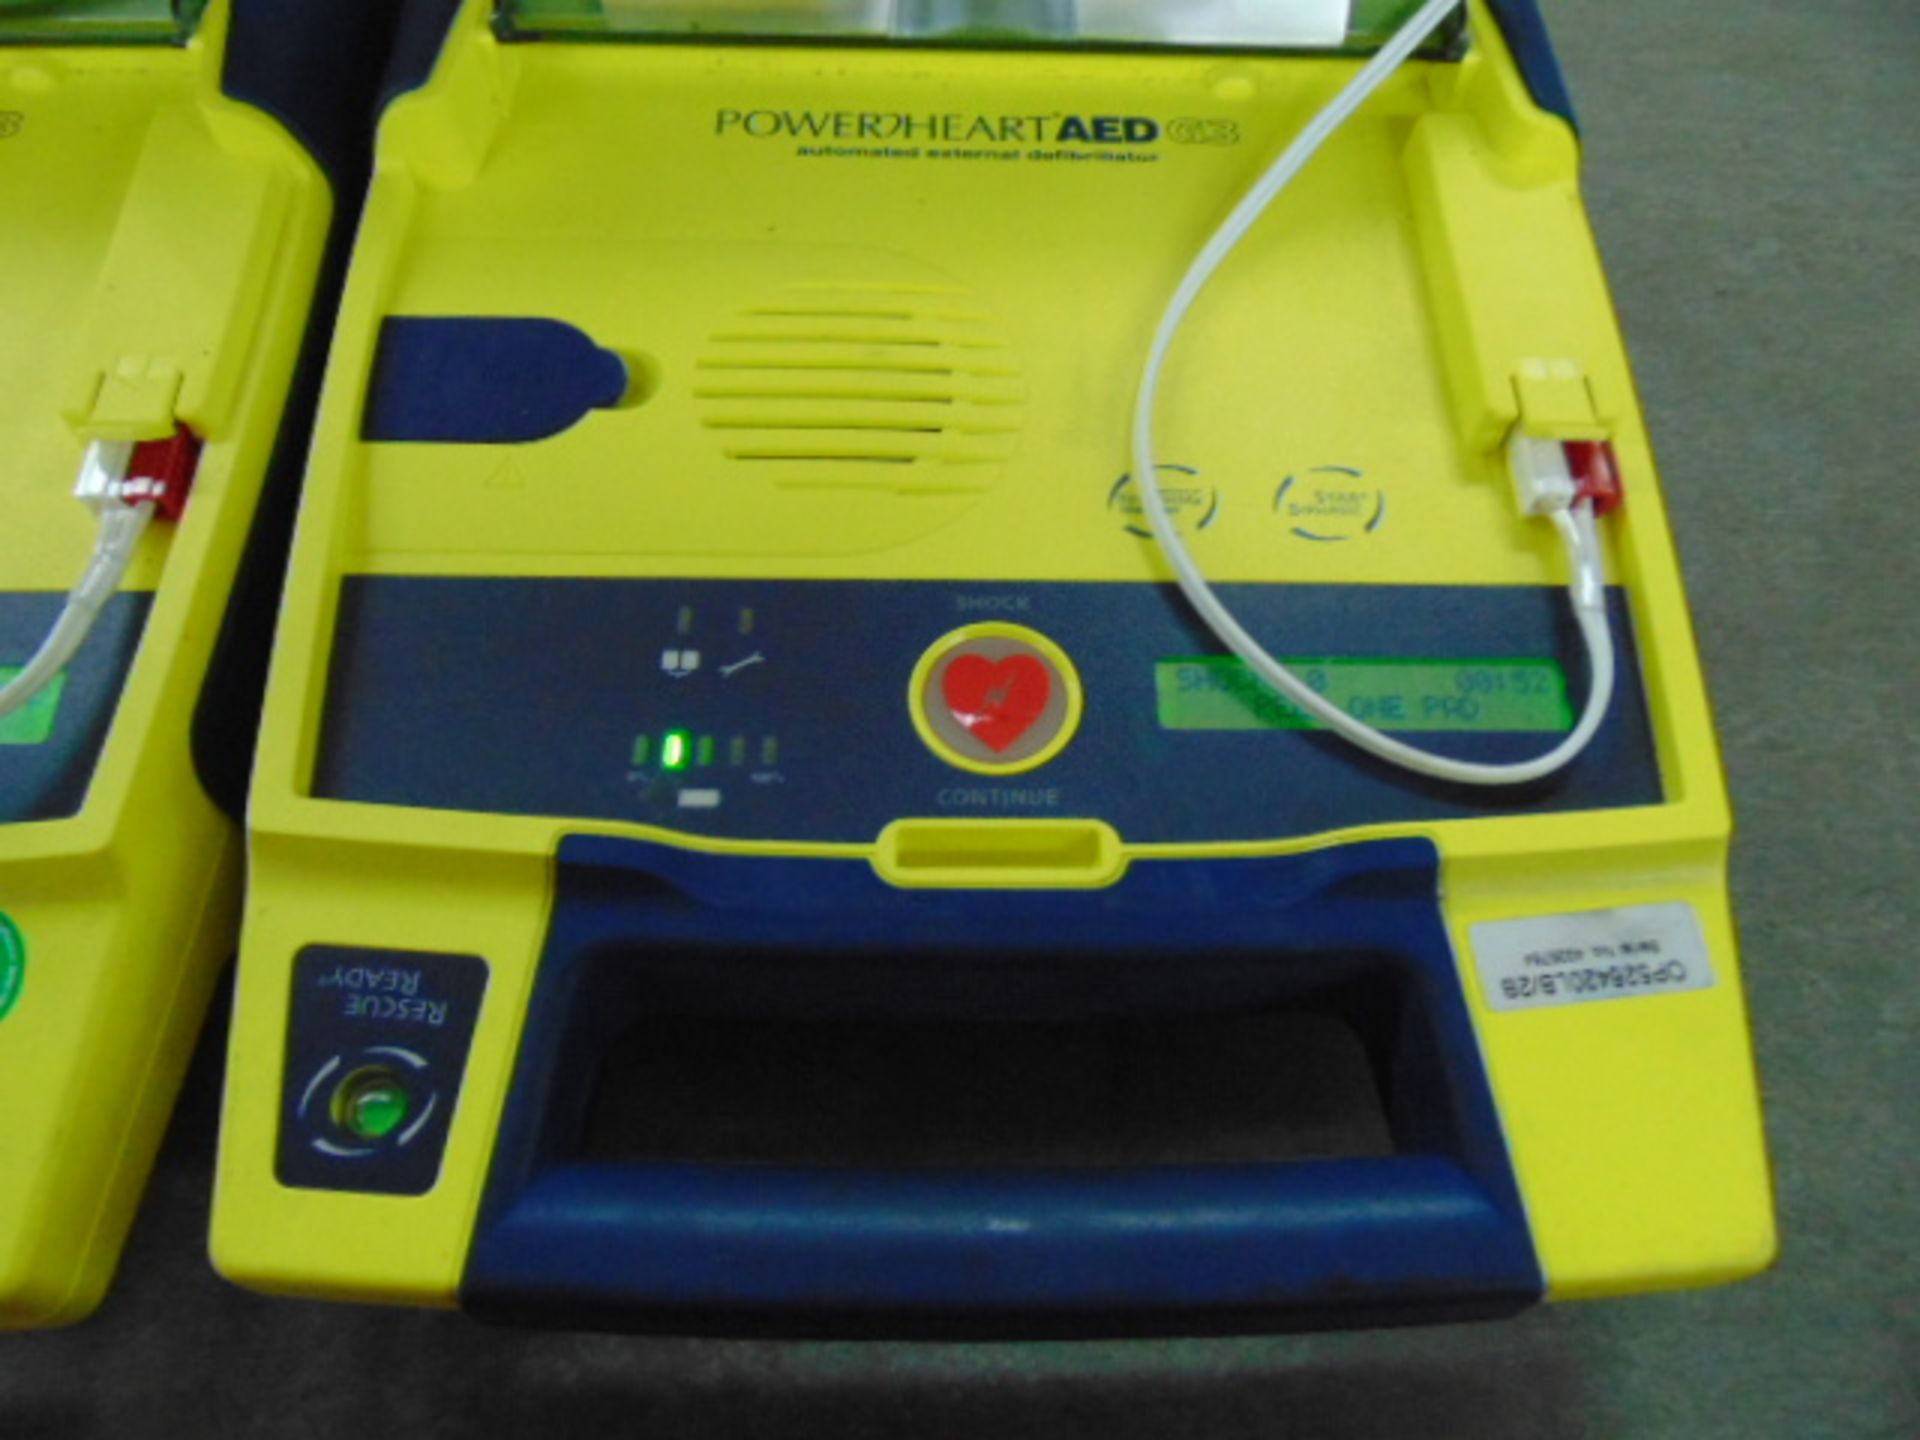 2 x Cardiac Science Powerheart G3 Automatic AED Automatic External Defribrillators - Bild 6 aus 12